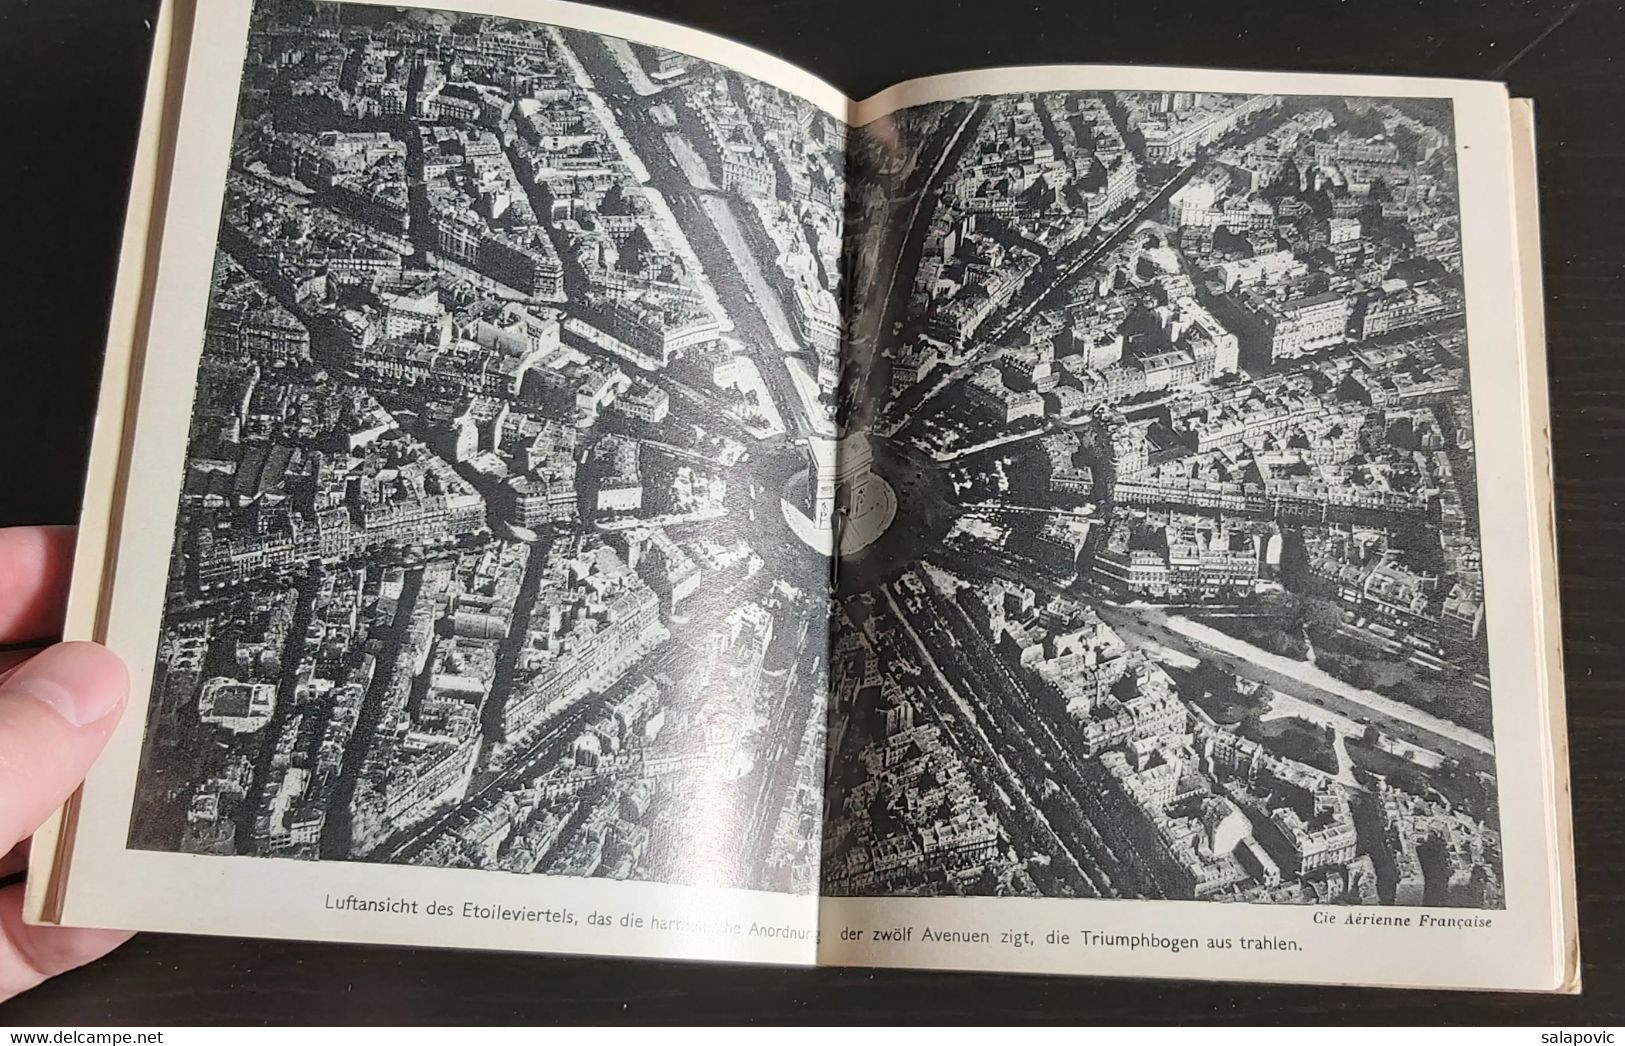 Illustrated Guide, Ilustrierter Führer Paris Und Seine Umgebung, Paris And Its Surroundings - Francia